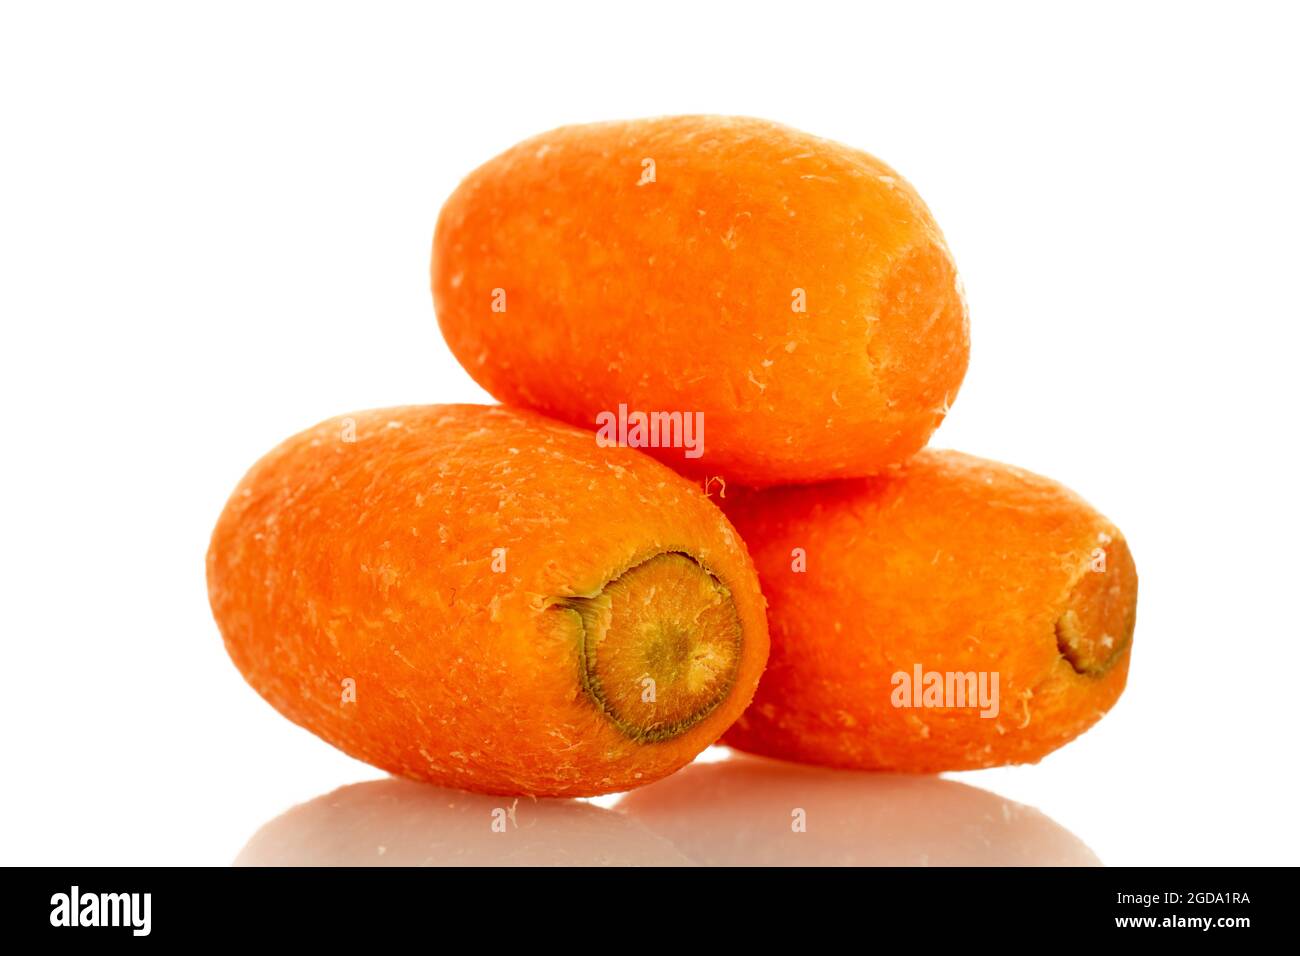 Three bright orange organic mini carrots, close-up, on a white background. Stock Photo